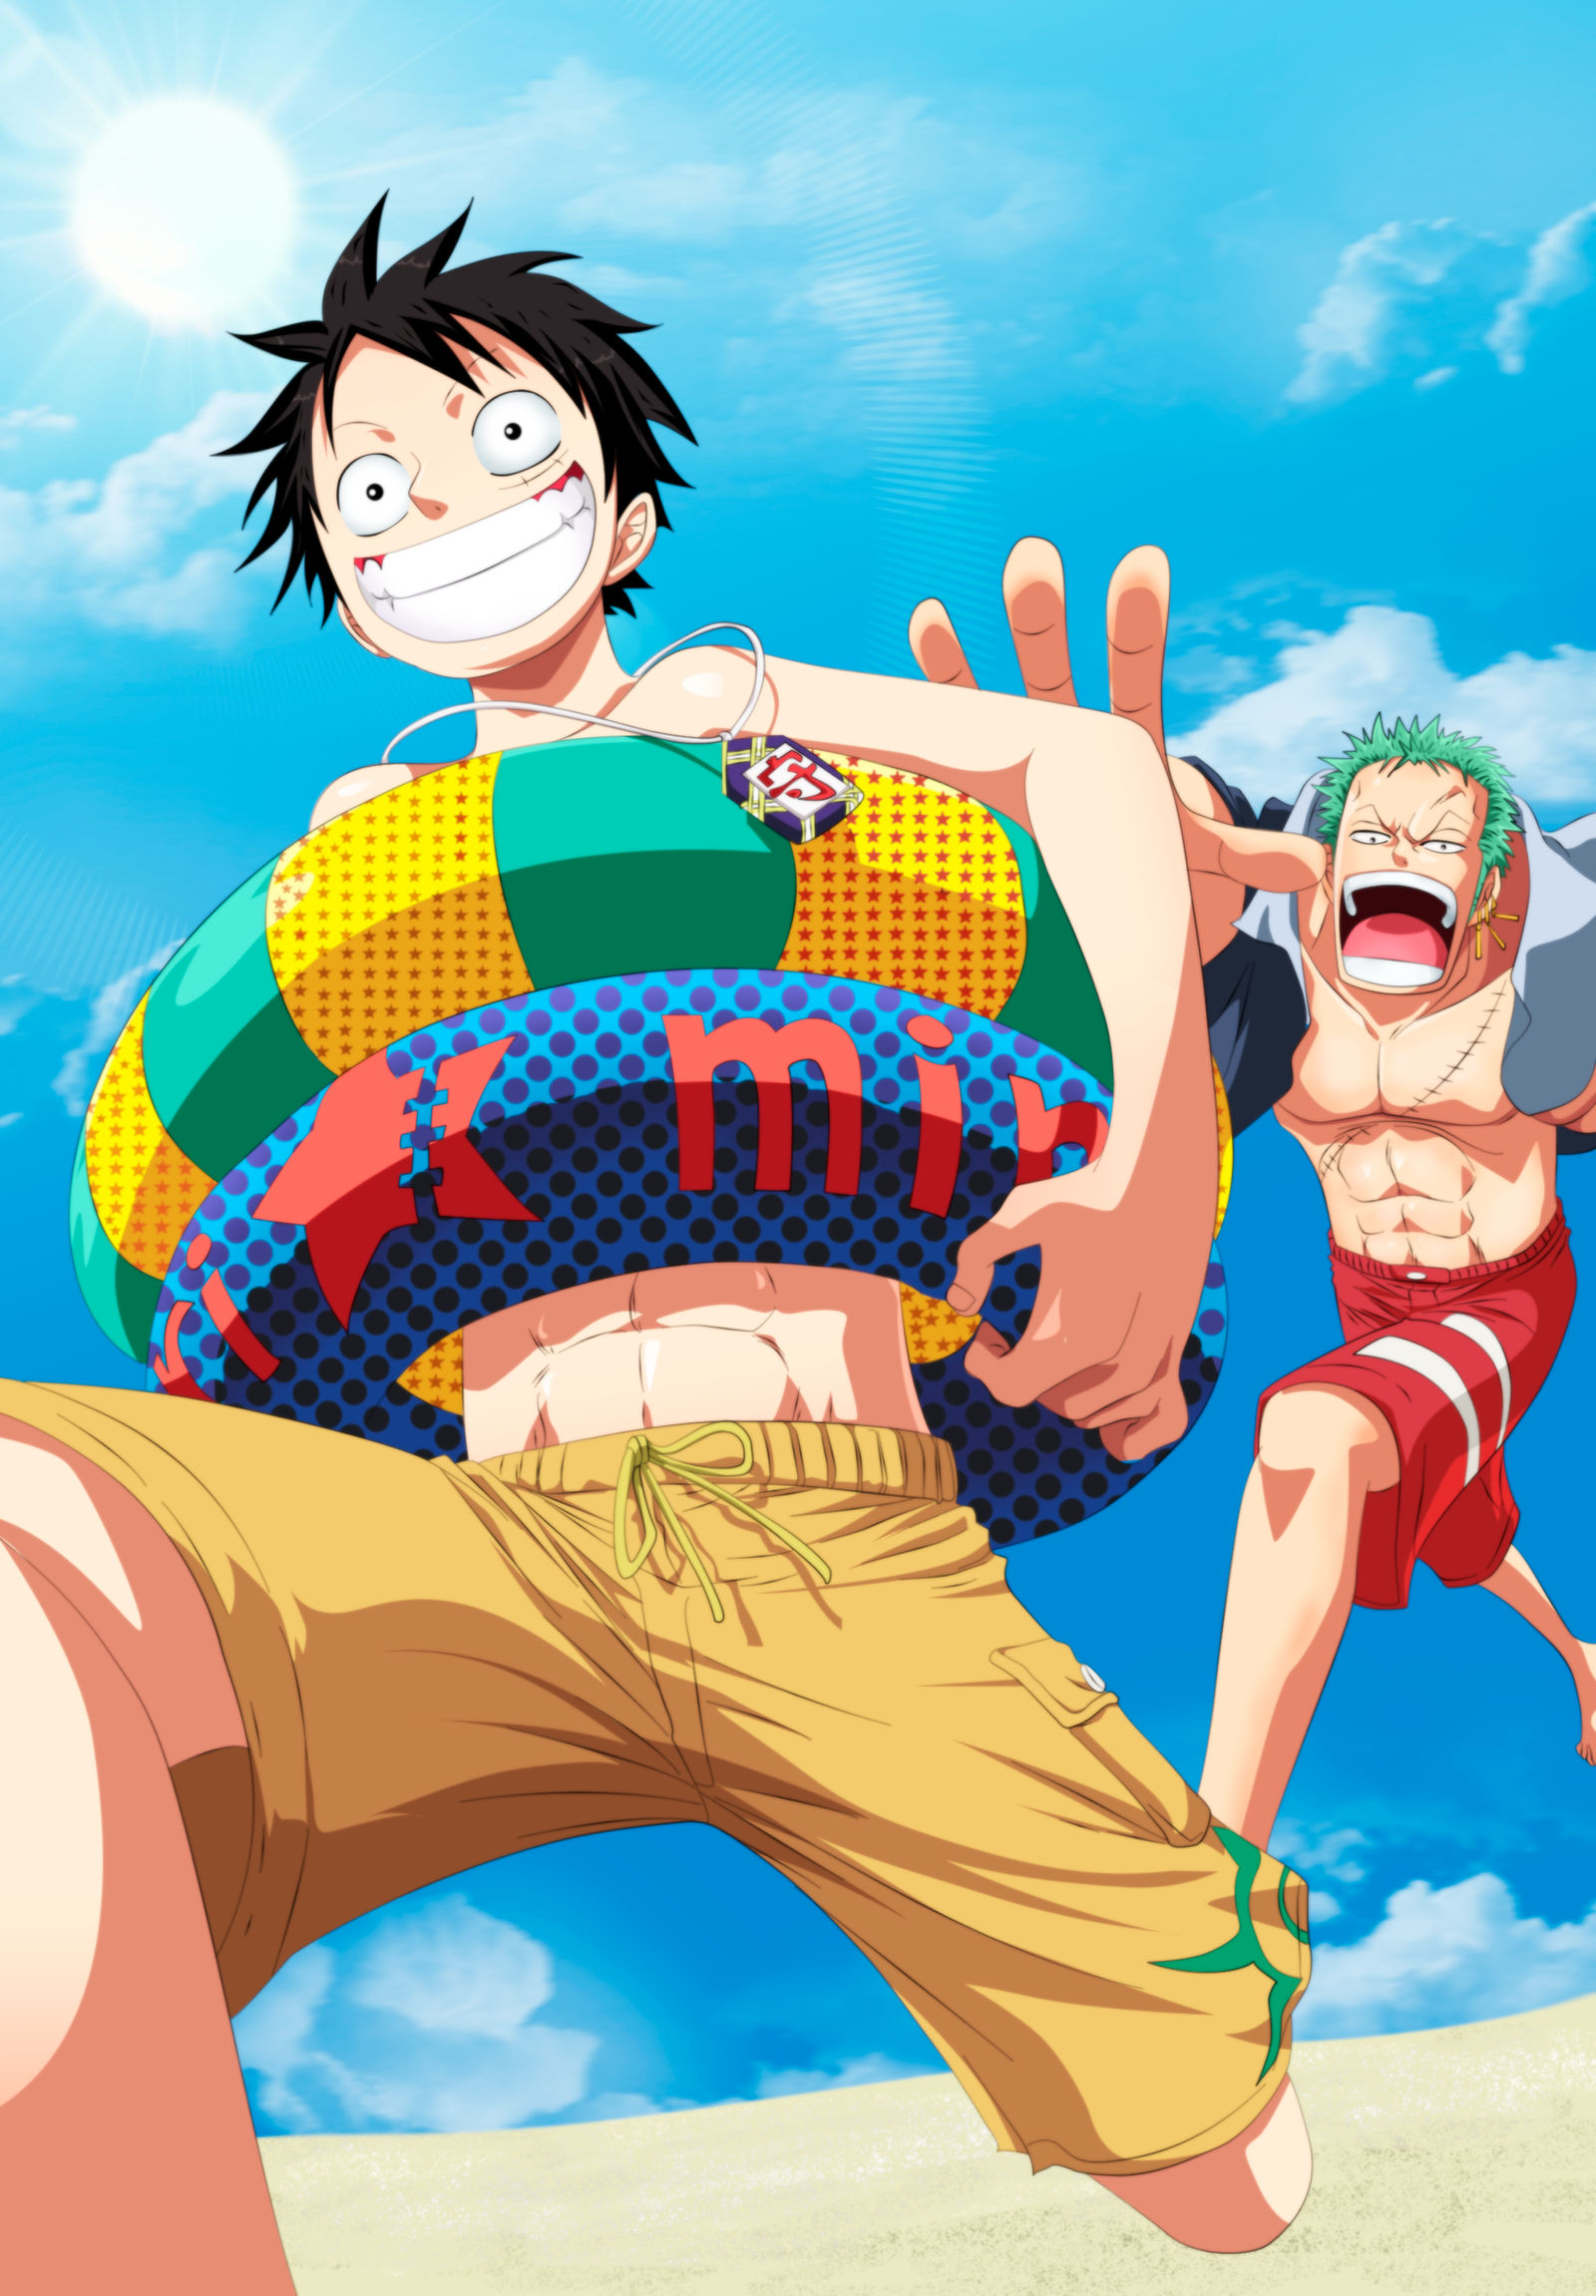 One Piece: Luffy and Zoro en la playa by eikens on DeviantArt